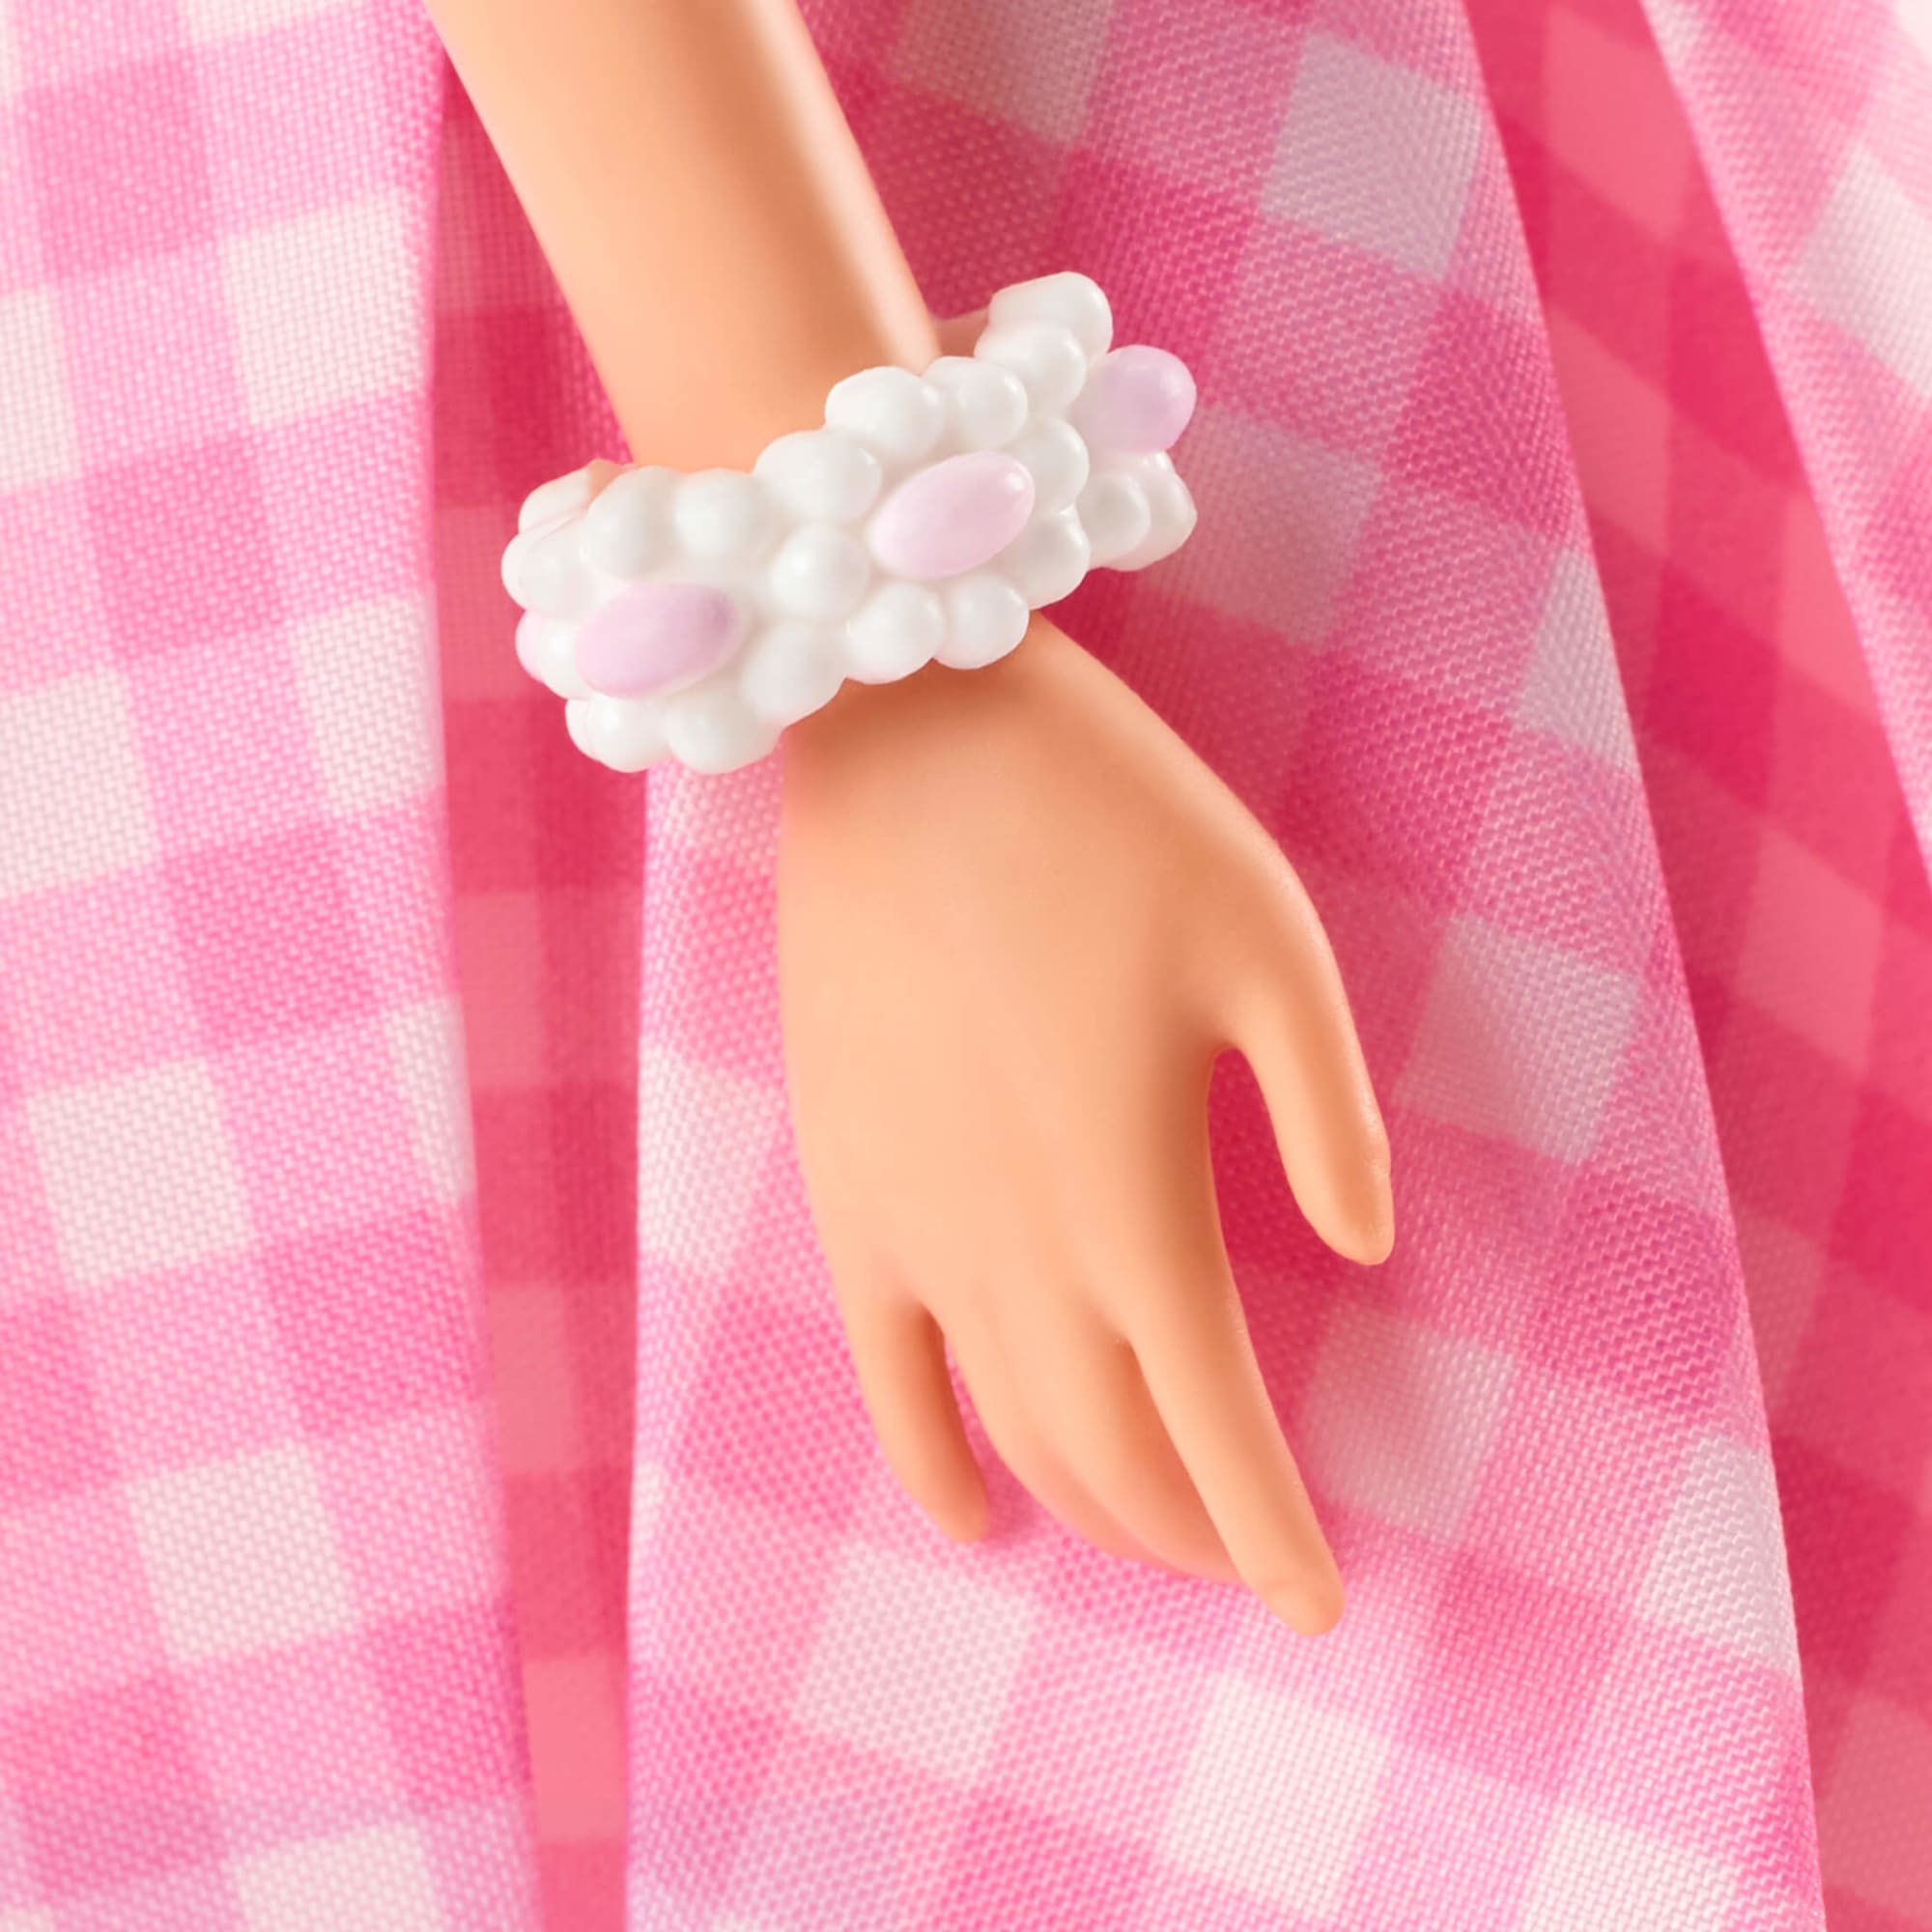 Barbie in Pink Gingham Dress – Barbie The Movie